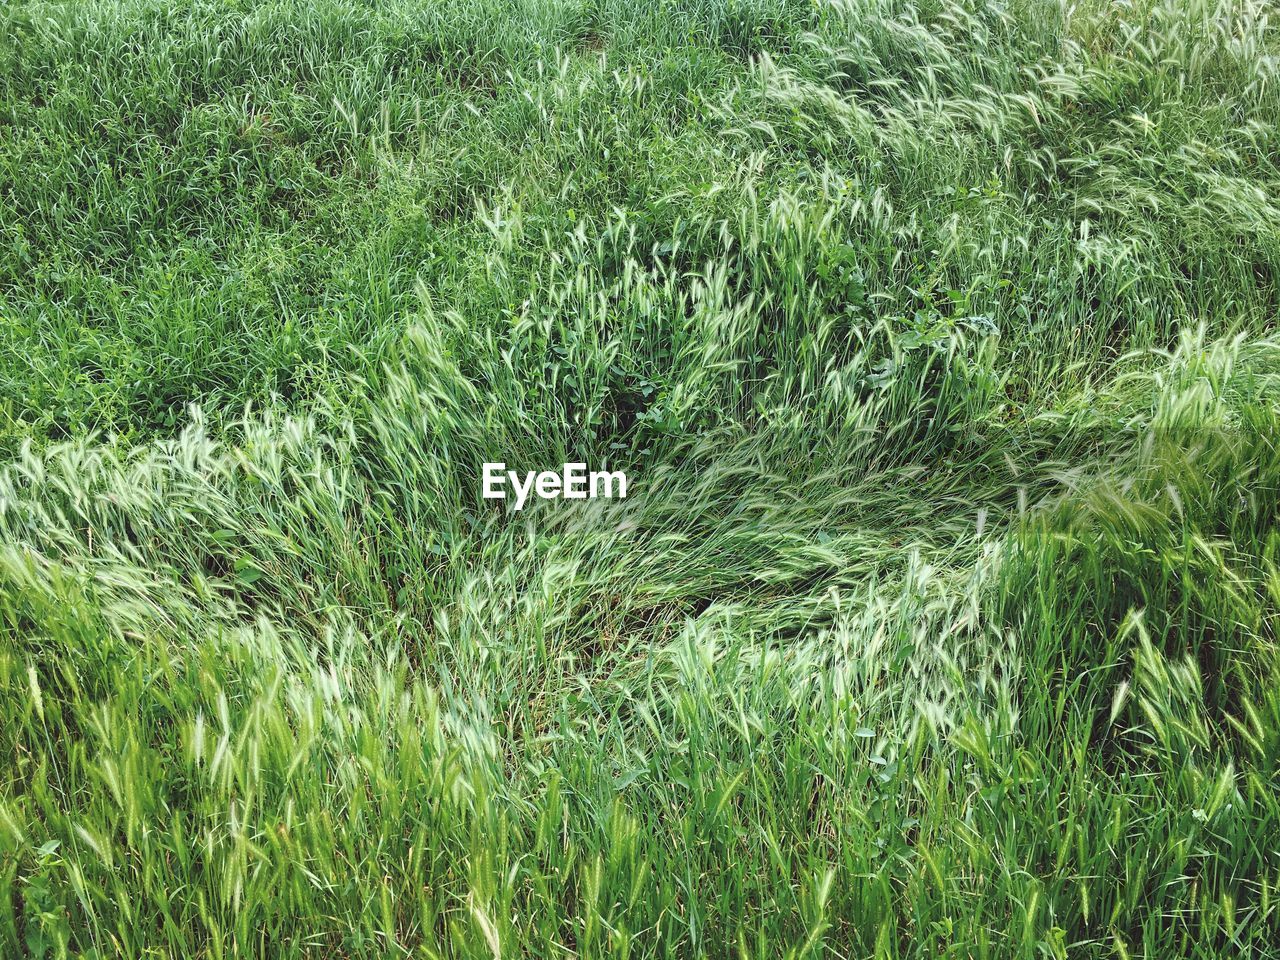 VIEW OF GRASS FIELD